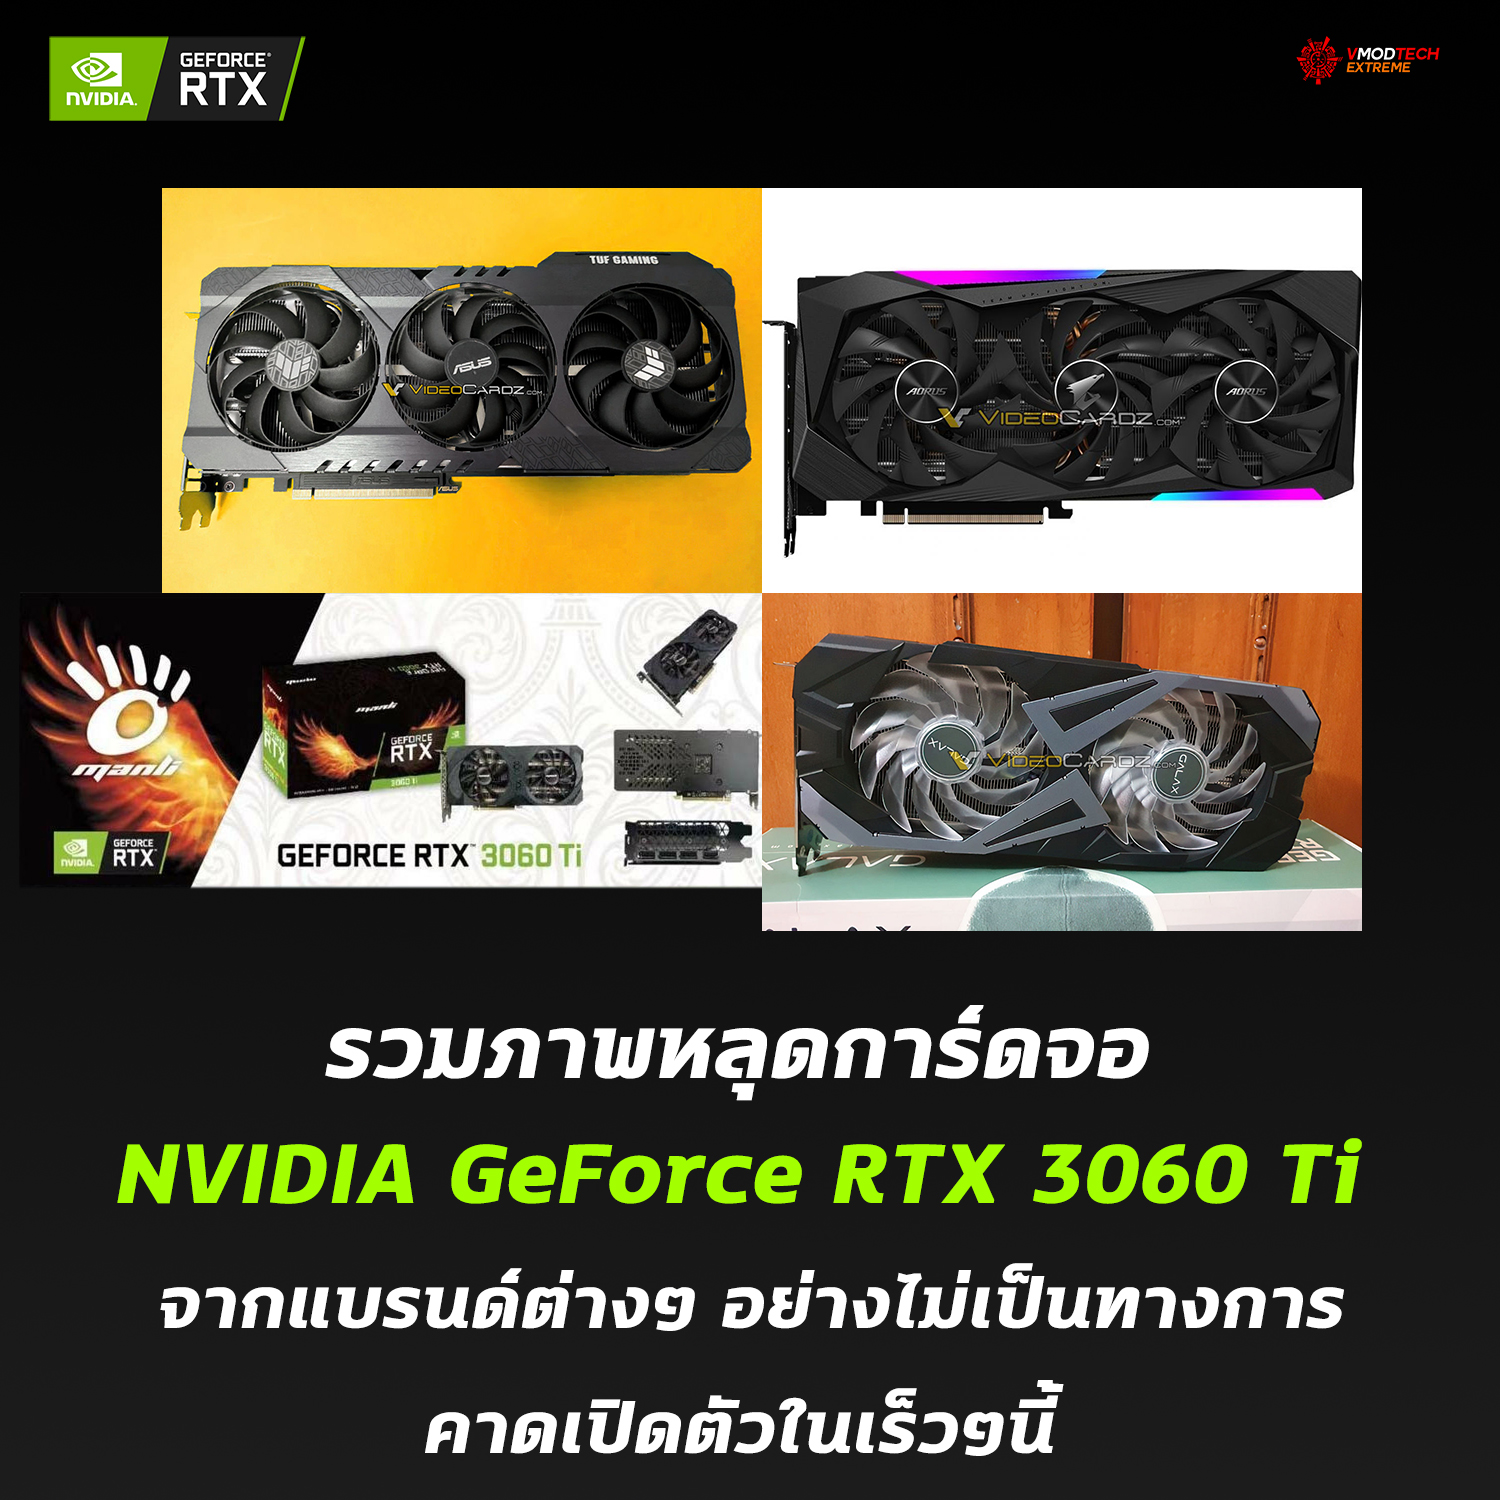 nvidia geforce rtx 3060 ti picture2020 รวมภาพหลุดการ์ดจอ NVIDIA GeForce RTX 3060 Ti จากแบรนด์ต่างๆอย่างไม่เป็นทางการ